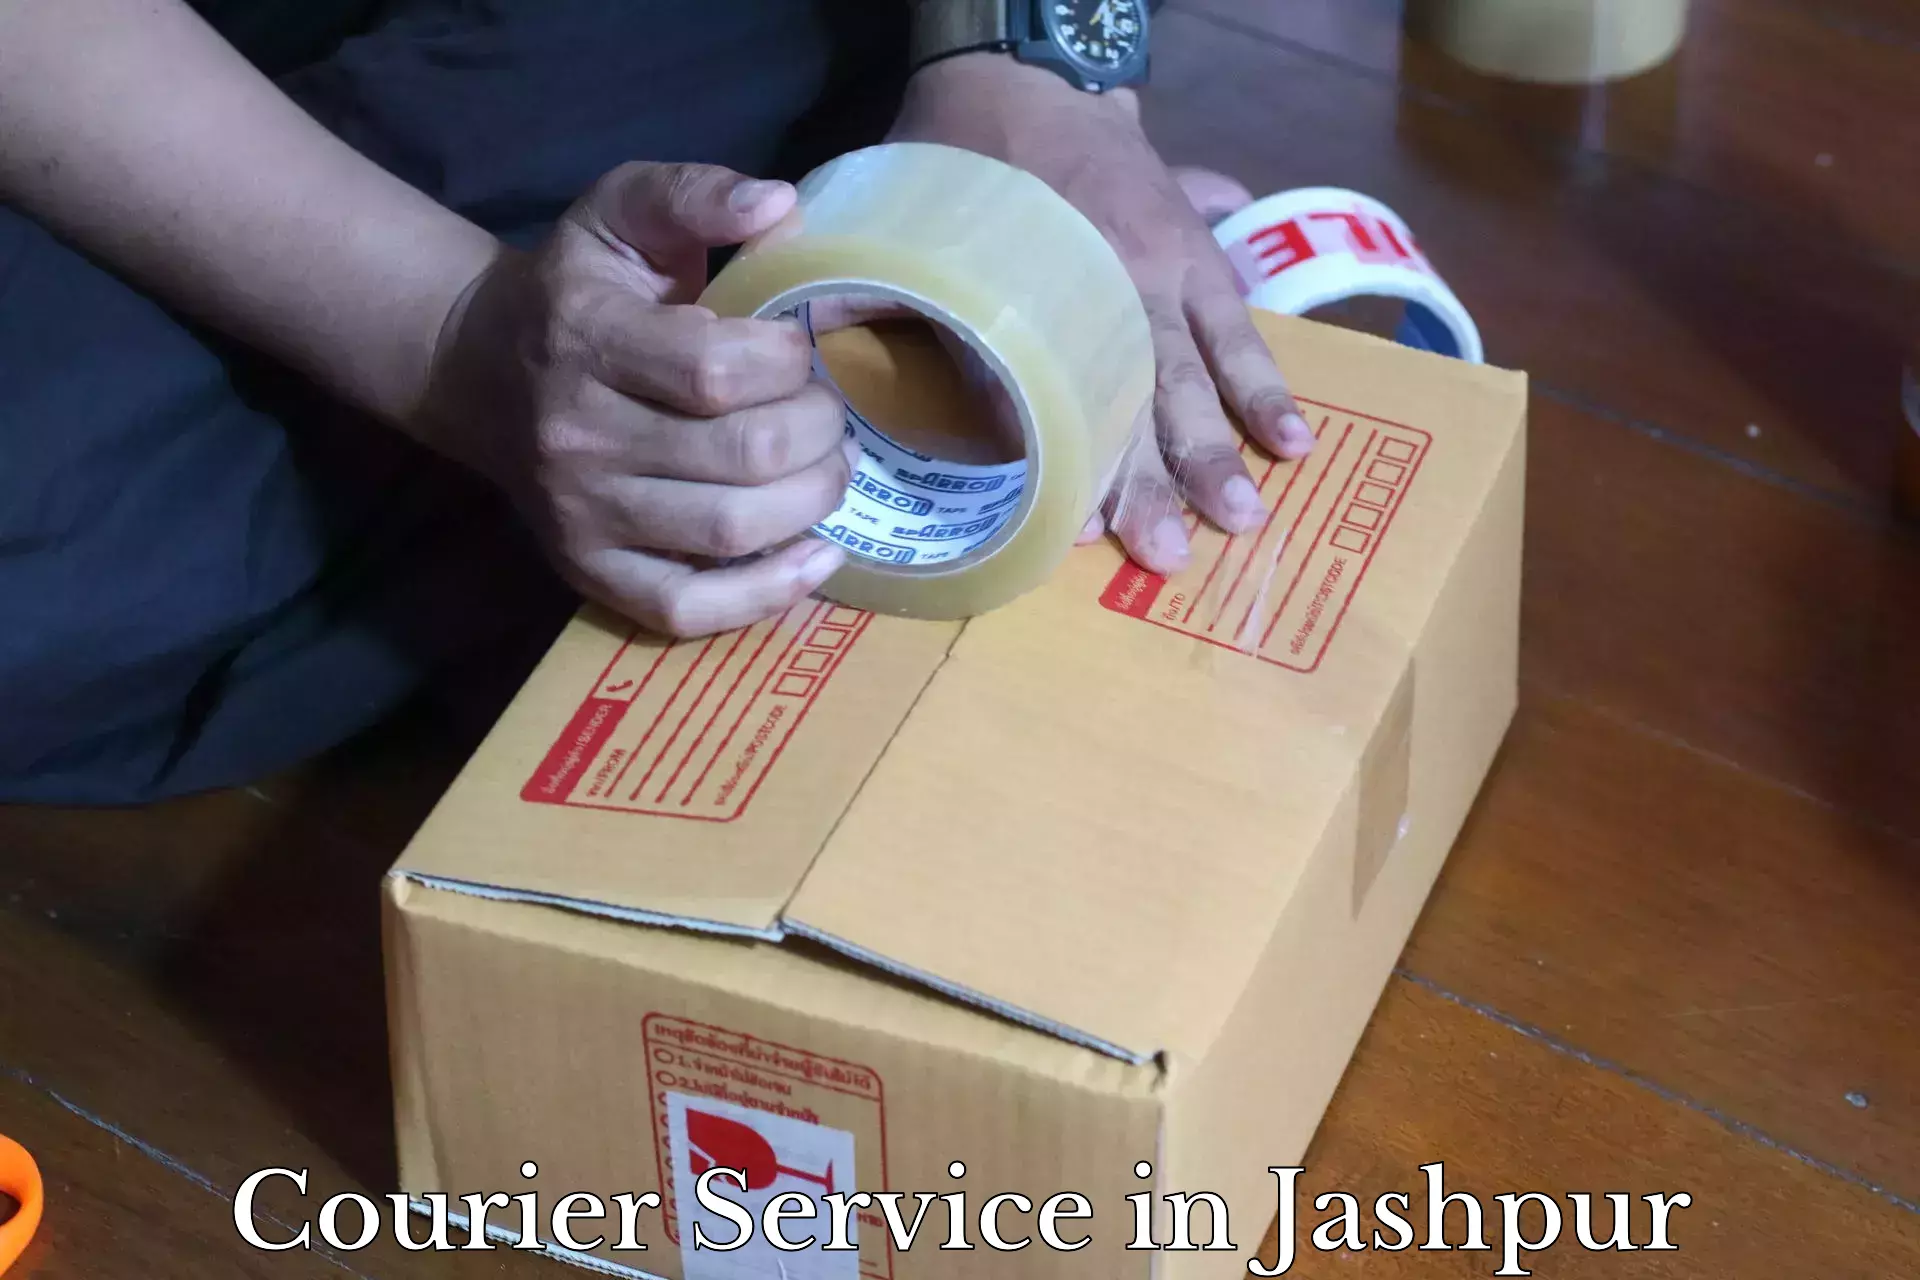 Expedited parcel delivery in Jashpur